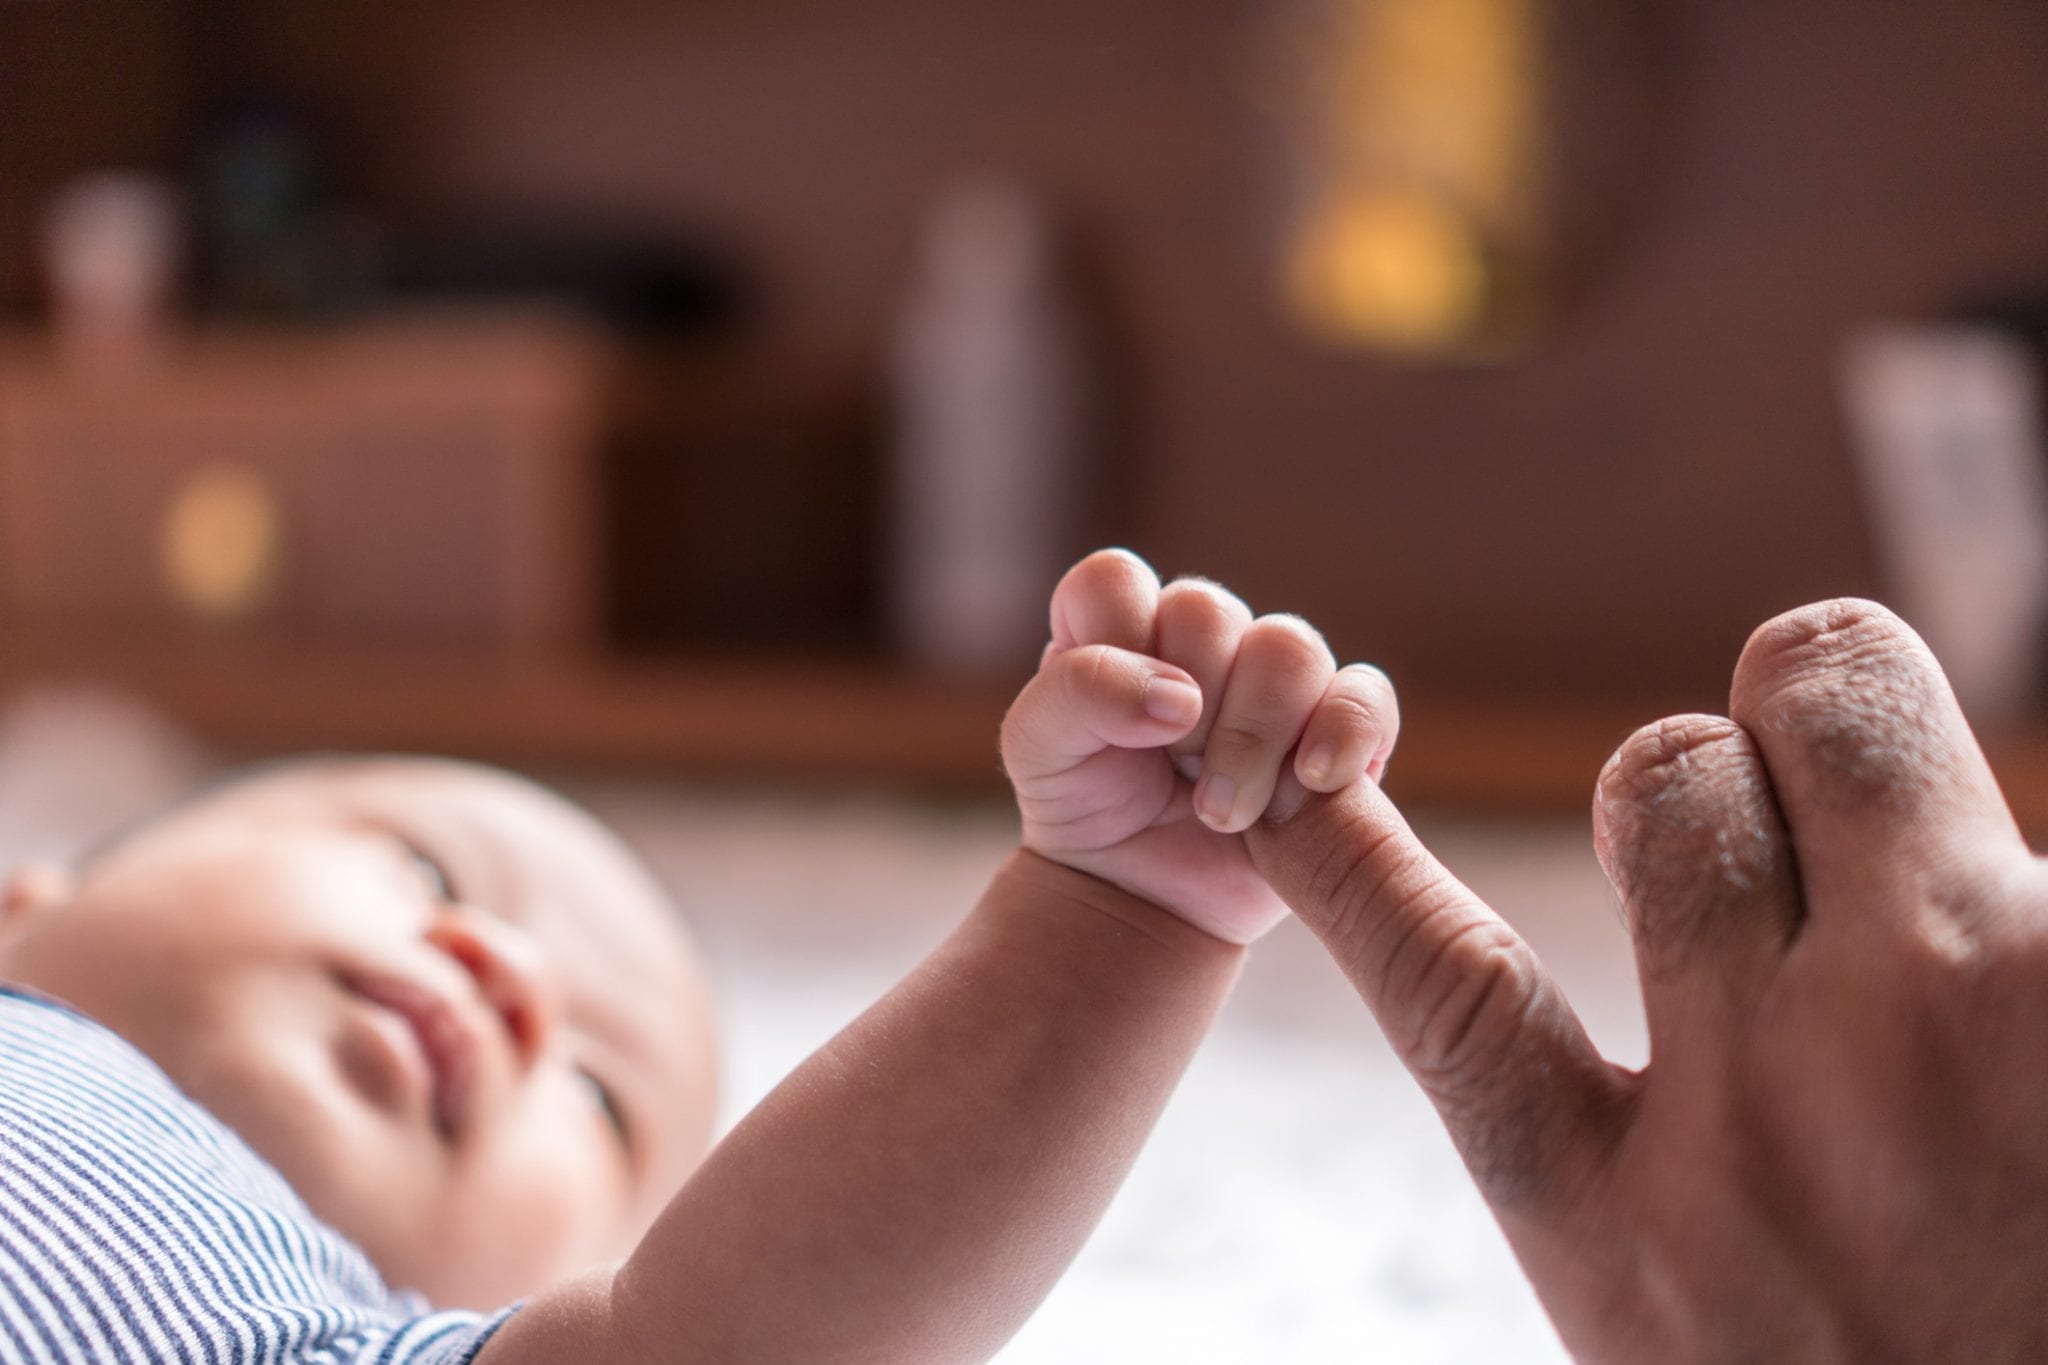 Why do Newborn Babies Startle? The Moro Reflex